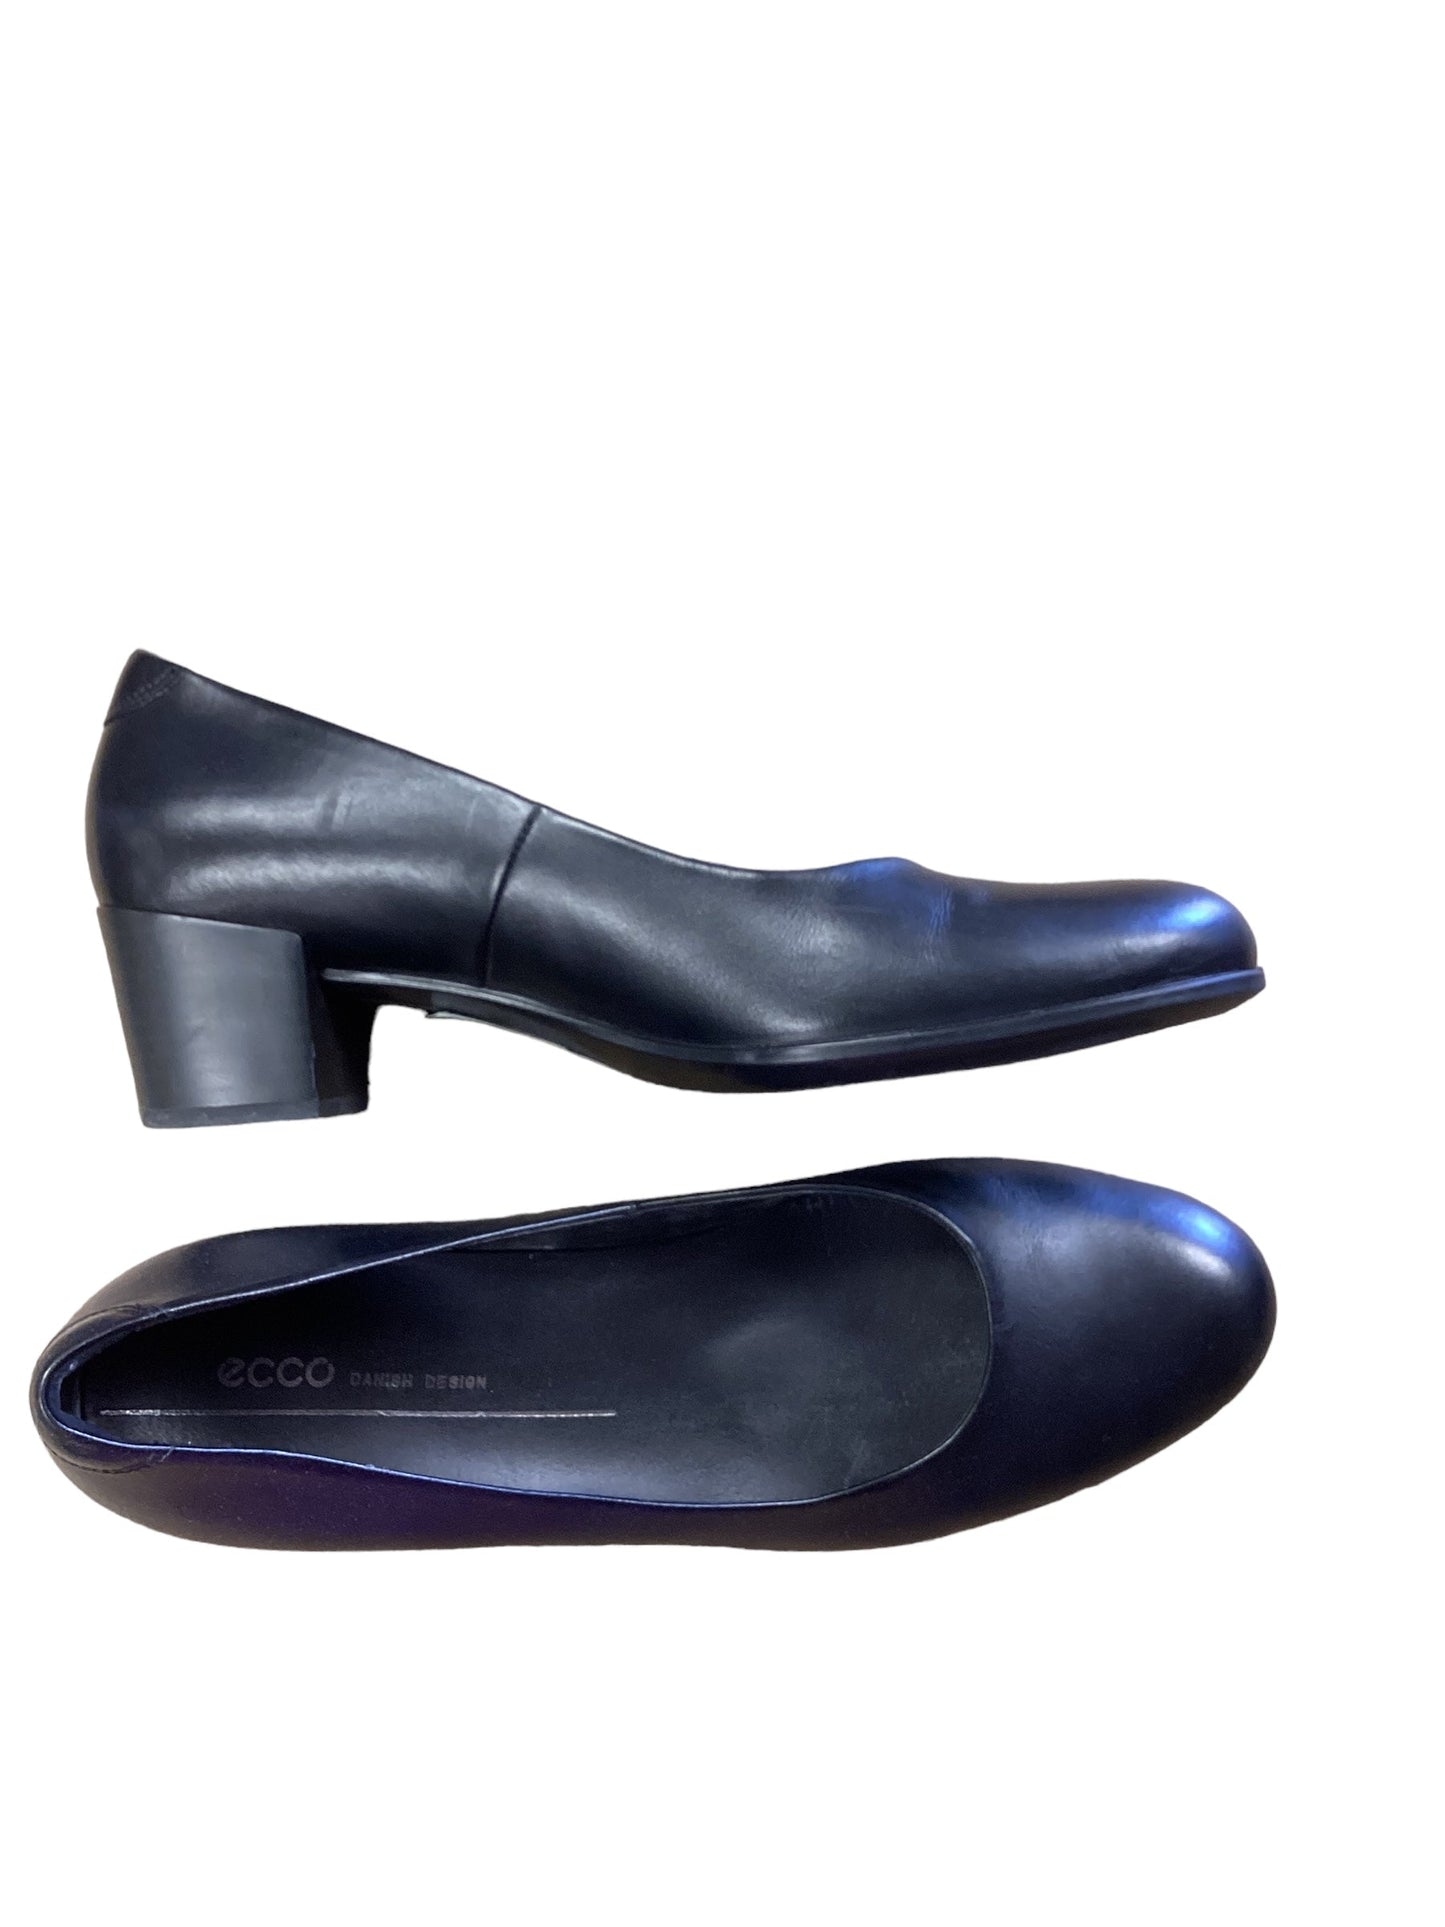 Black Shoes Heels Block Ecco, Size 10